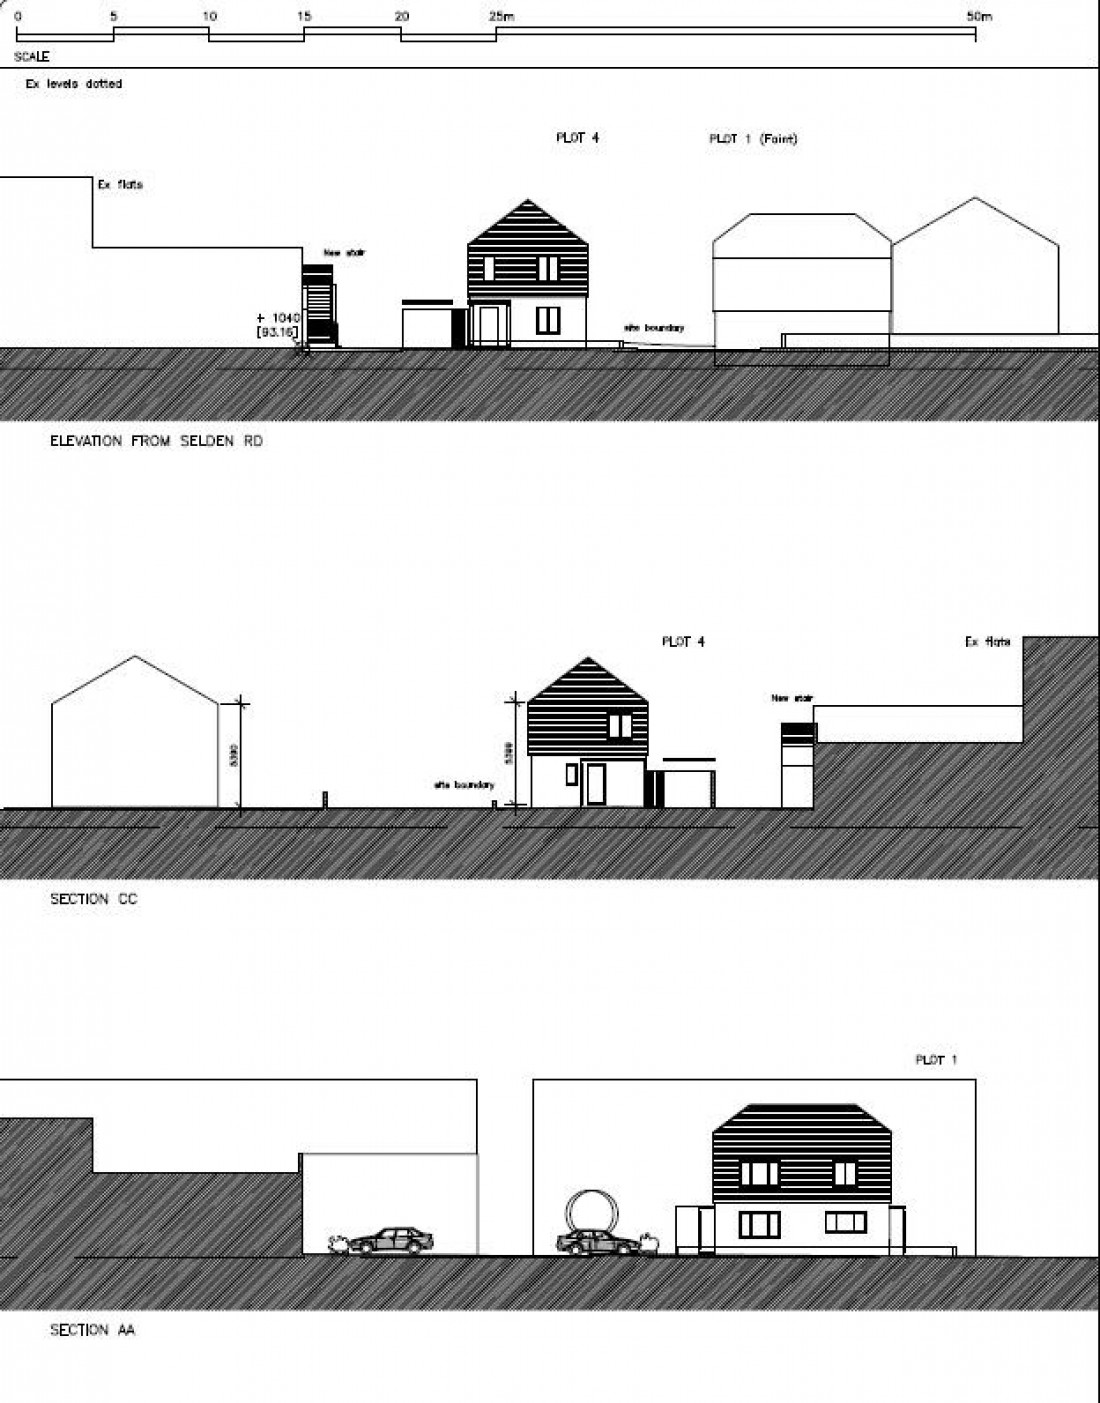 Floorplan for BUILDING PLOT - 4 x 3 BED HOUSES